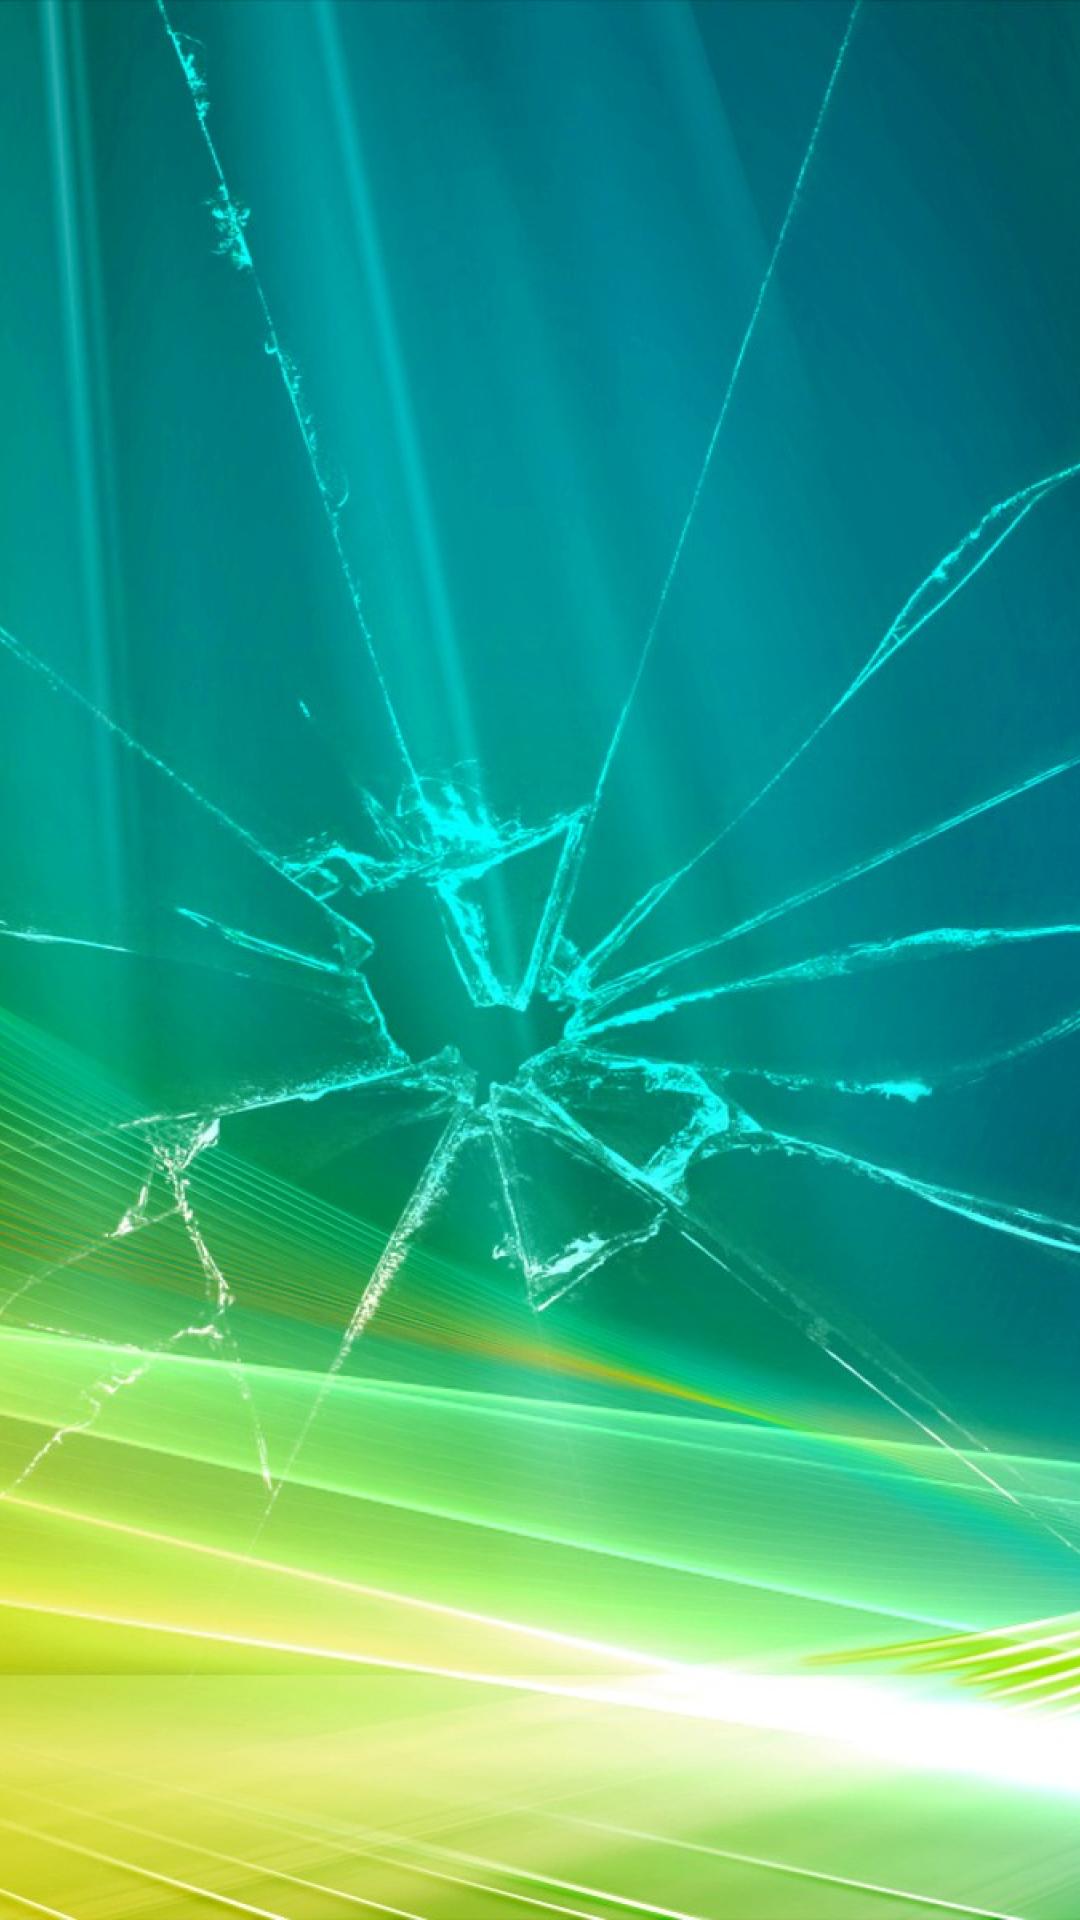 vidrio roto fondo de pantalla para iphone,verde,azul,turquesa,agua,línea